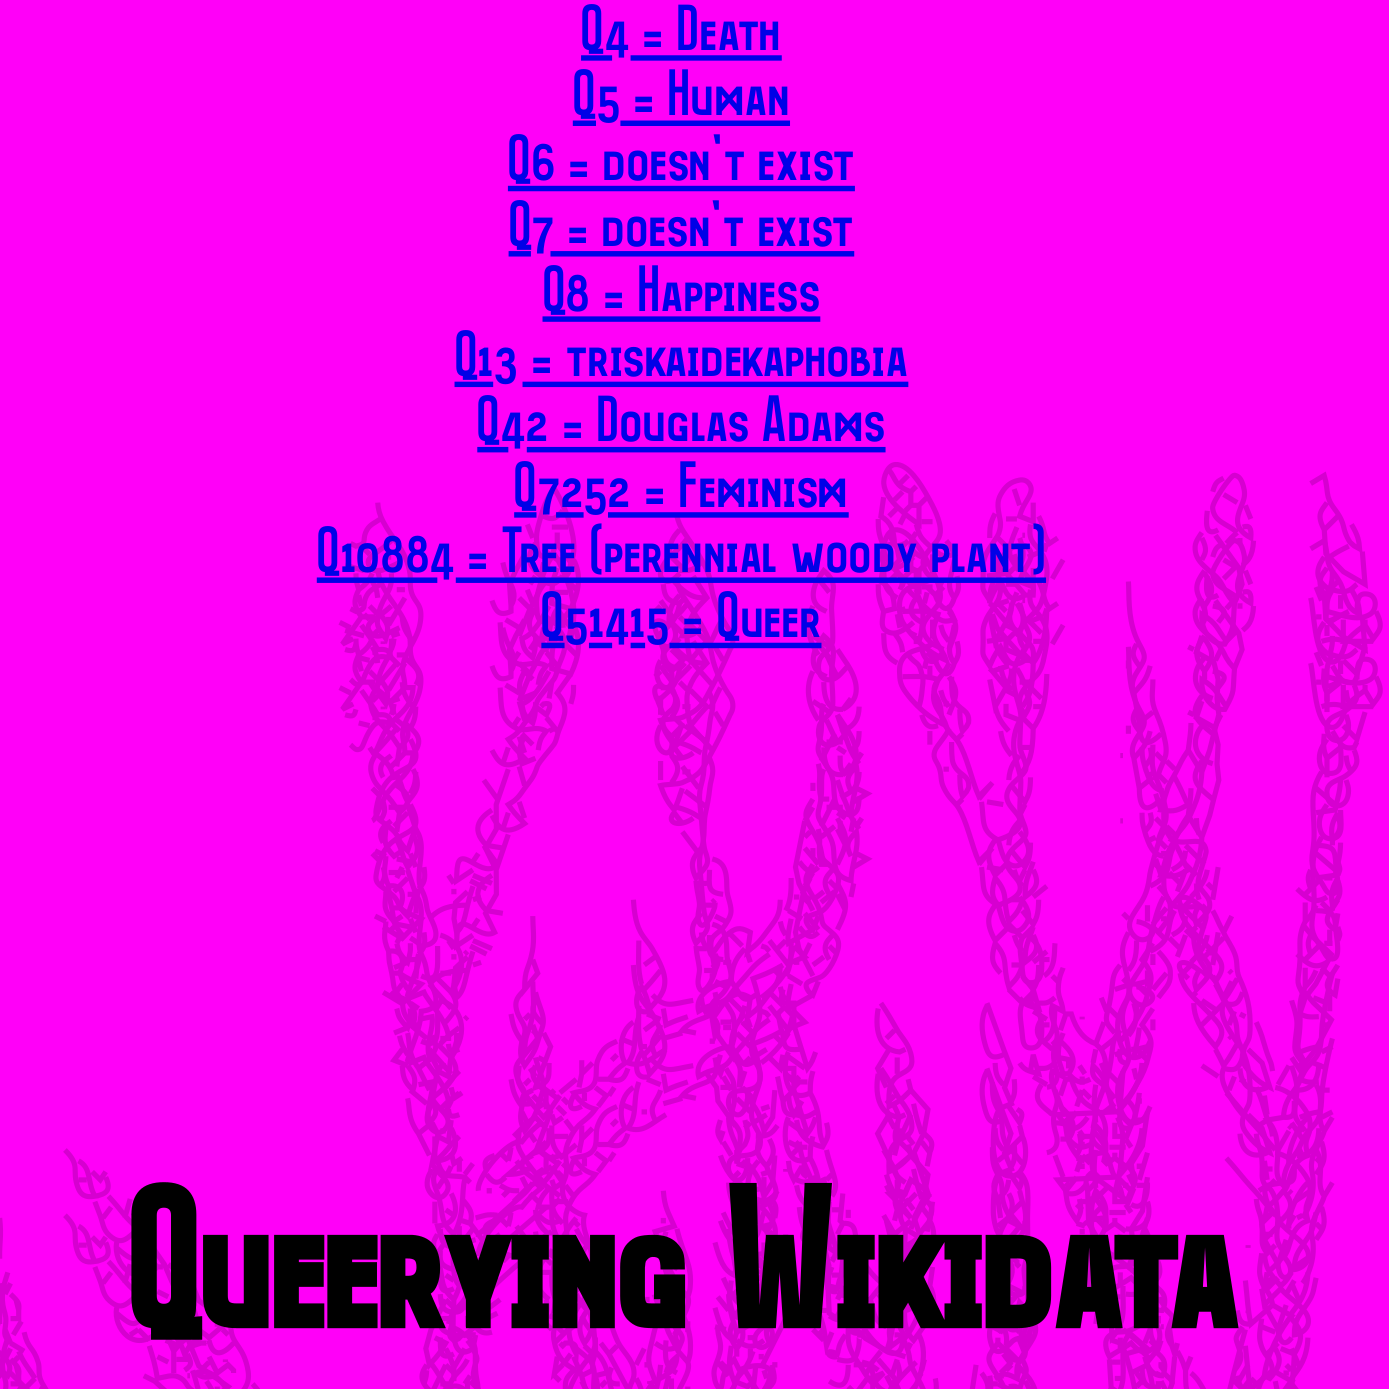 queerying wikidata